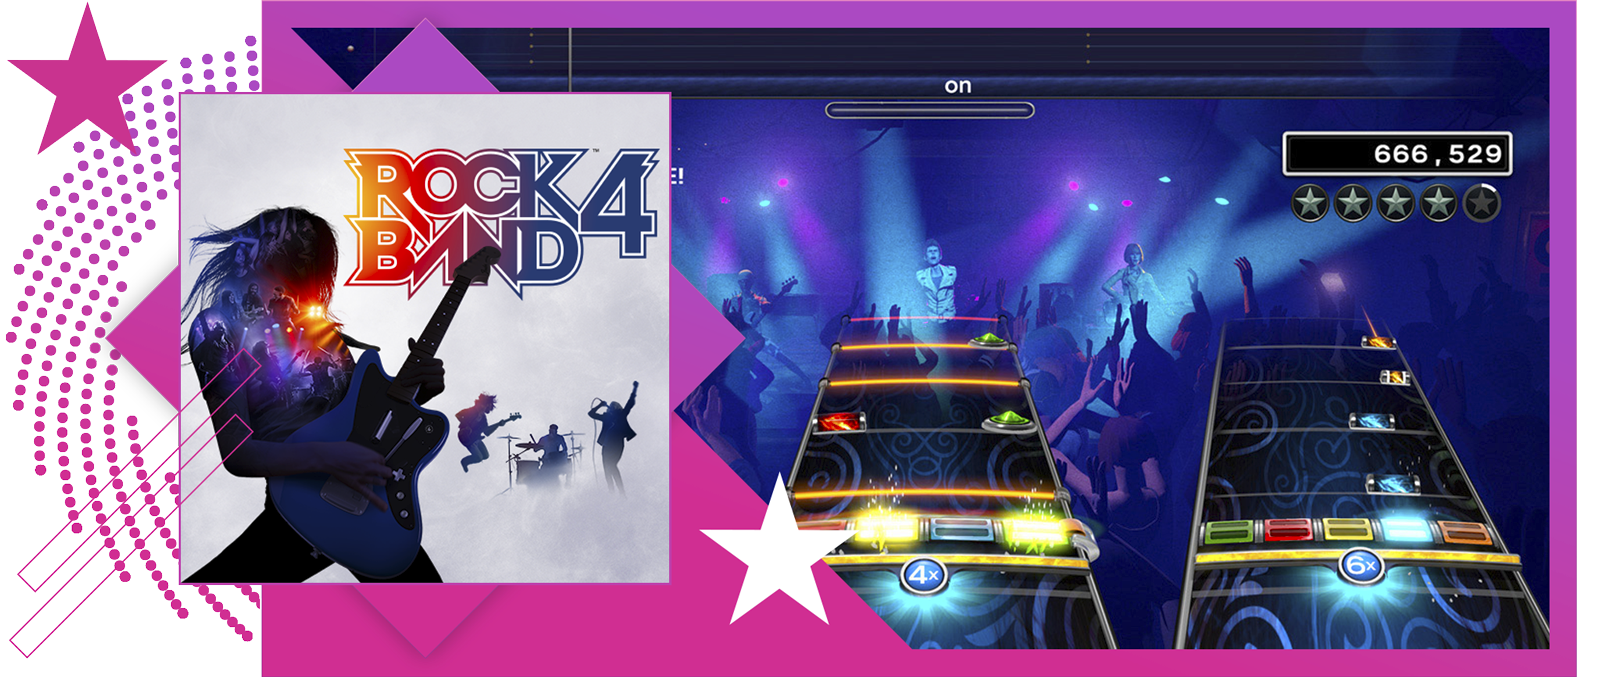 Najlepšie rytmické hry – obrázok s kľúčovou grafikou a ukážkou z hry Rock Band 4